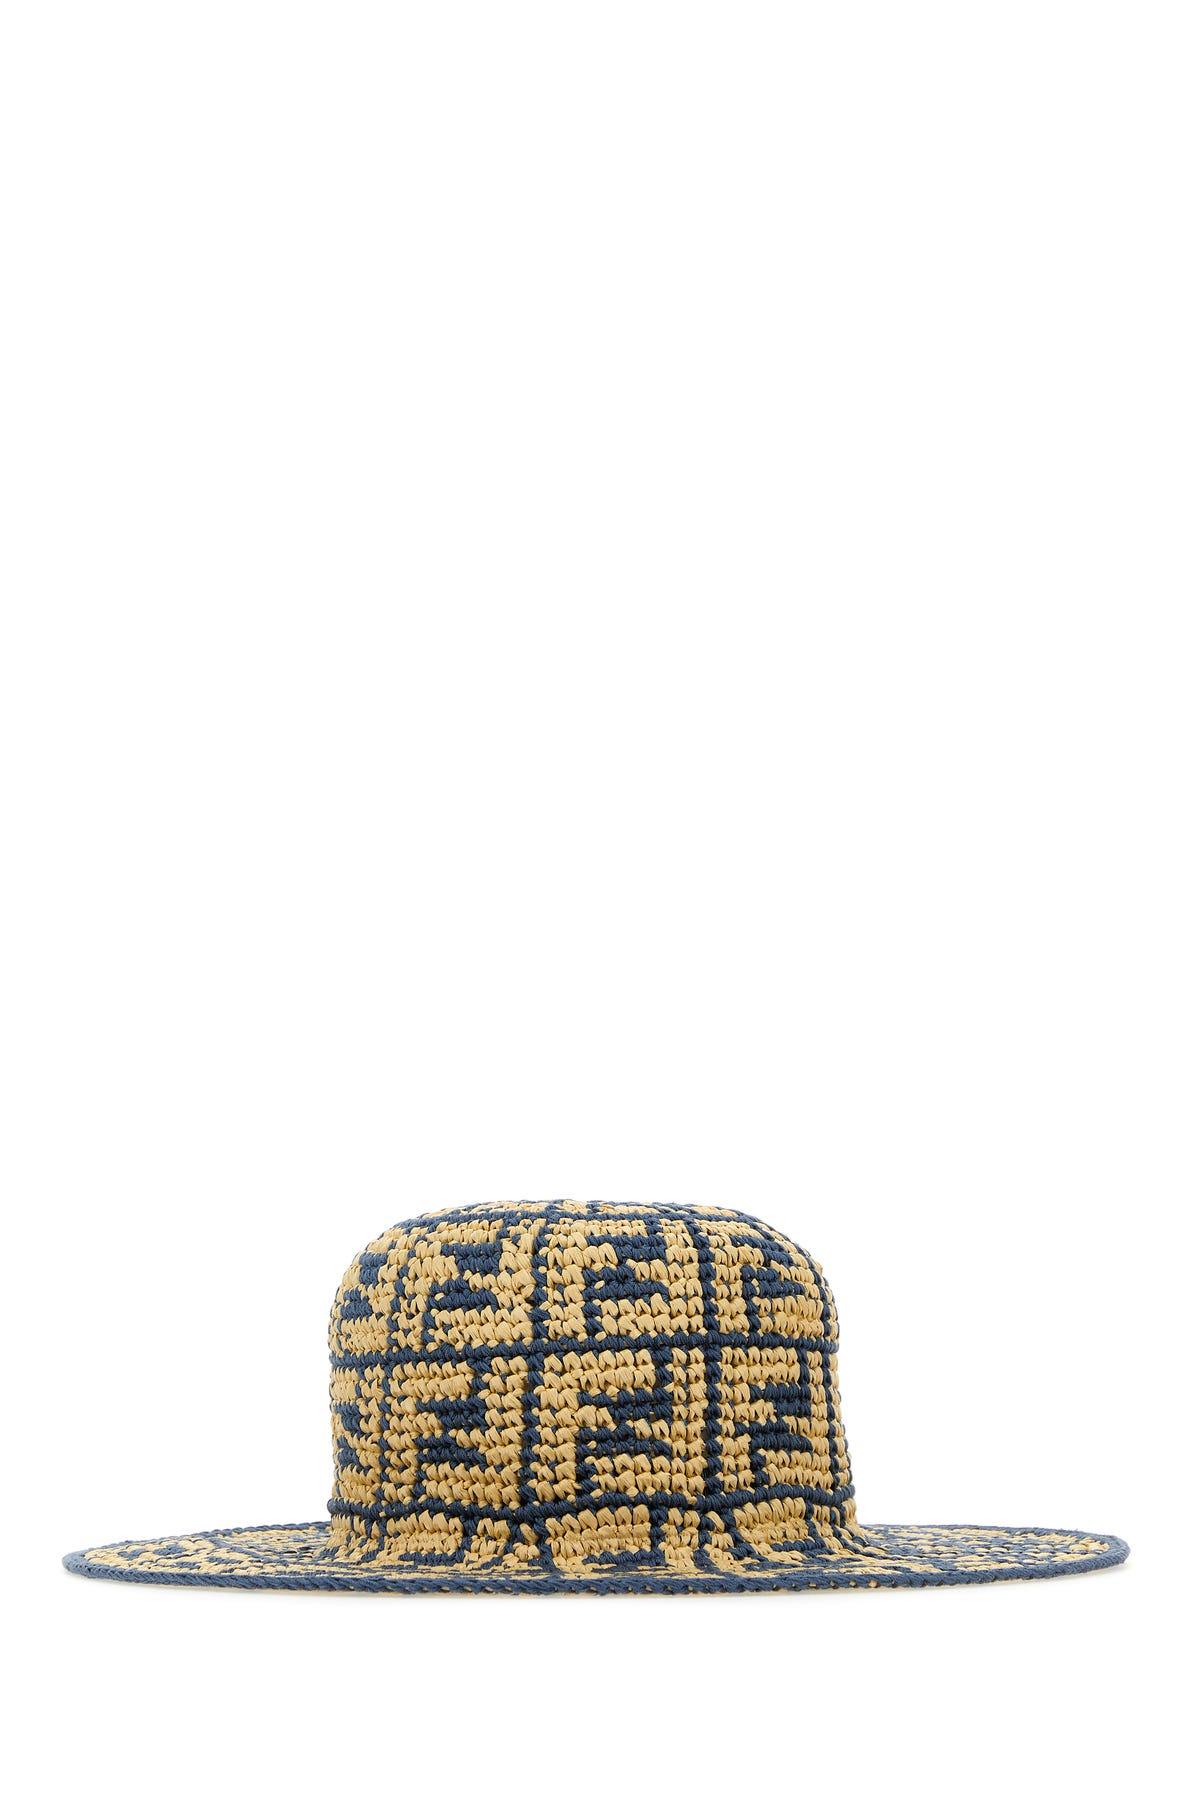 Fendi Two-tone Raffia Hat in Metallic | Lyst